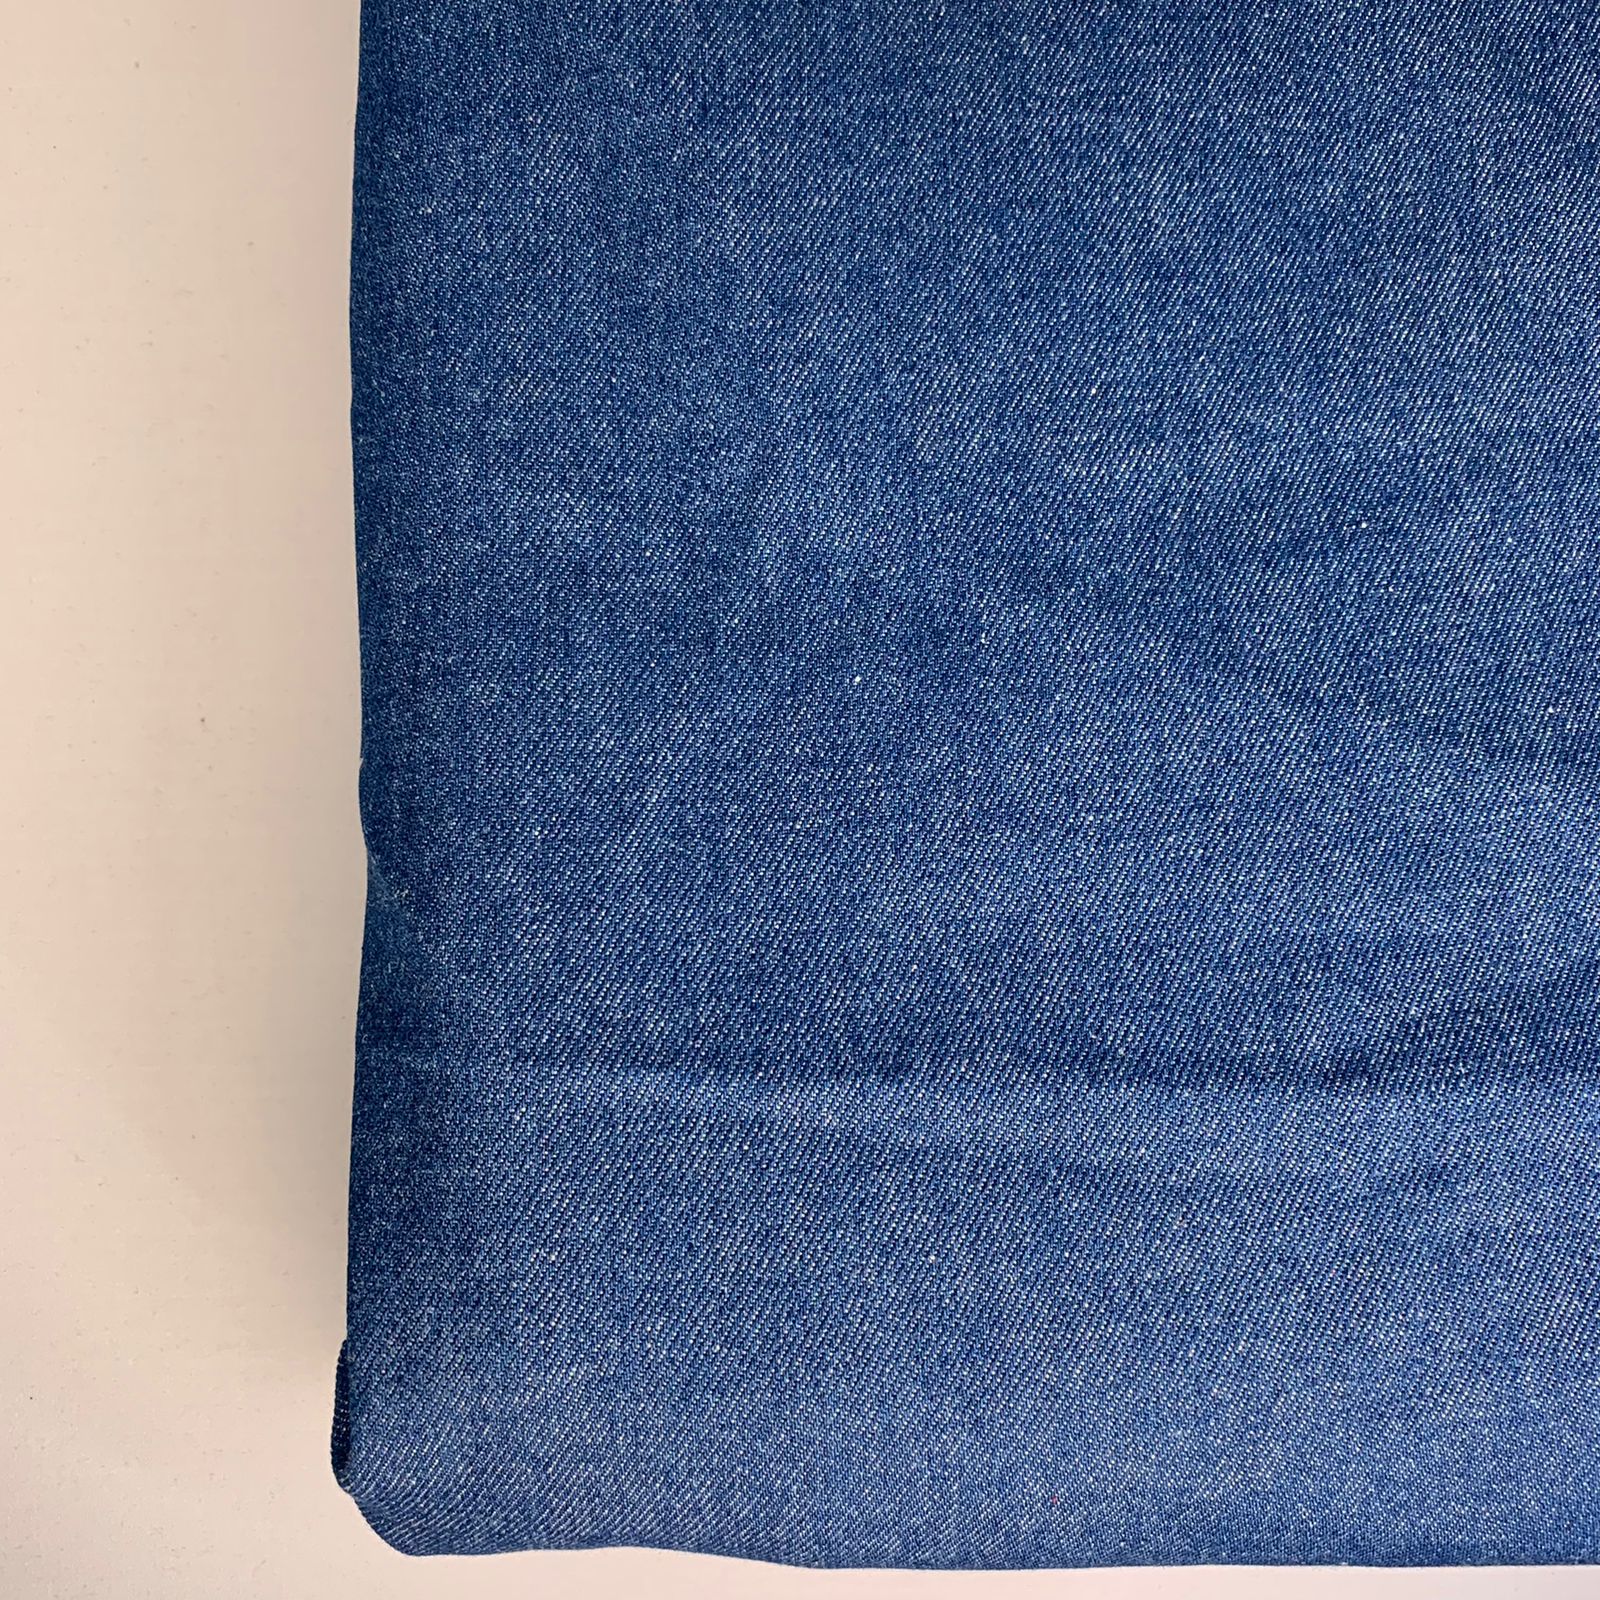 Tecido malha jeans kit com 0,95 kg aprox. 1,95 m